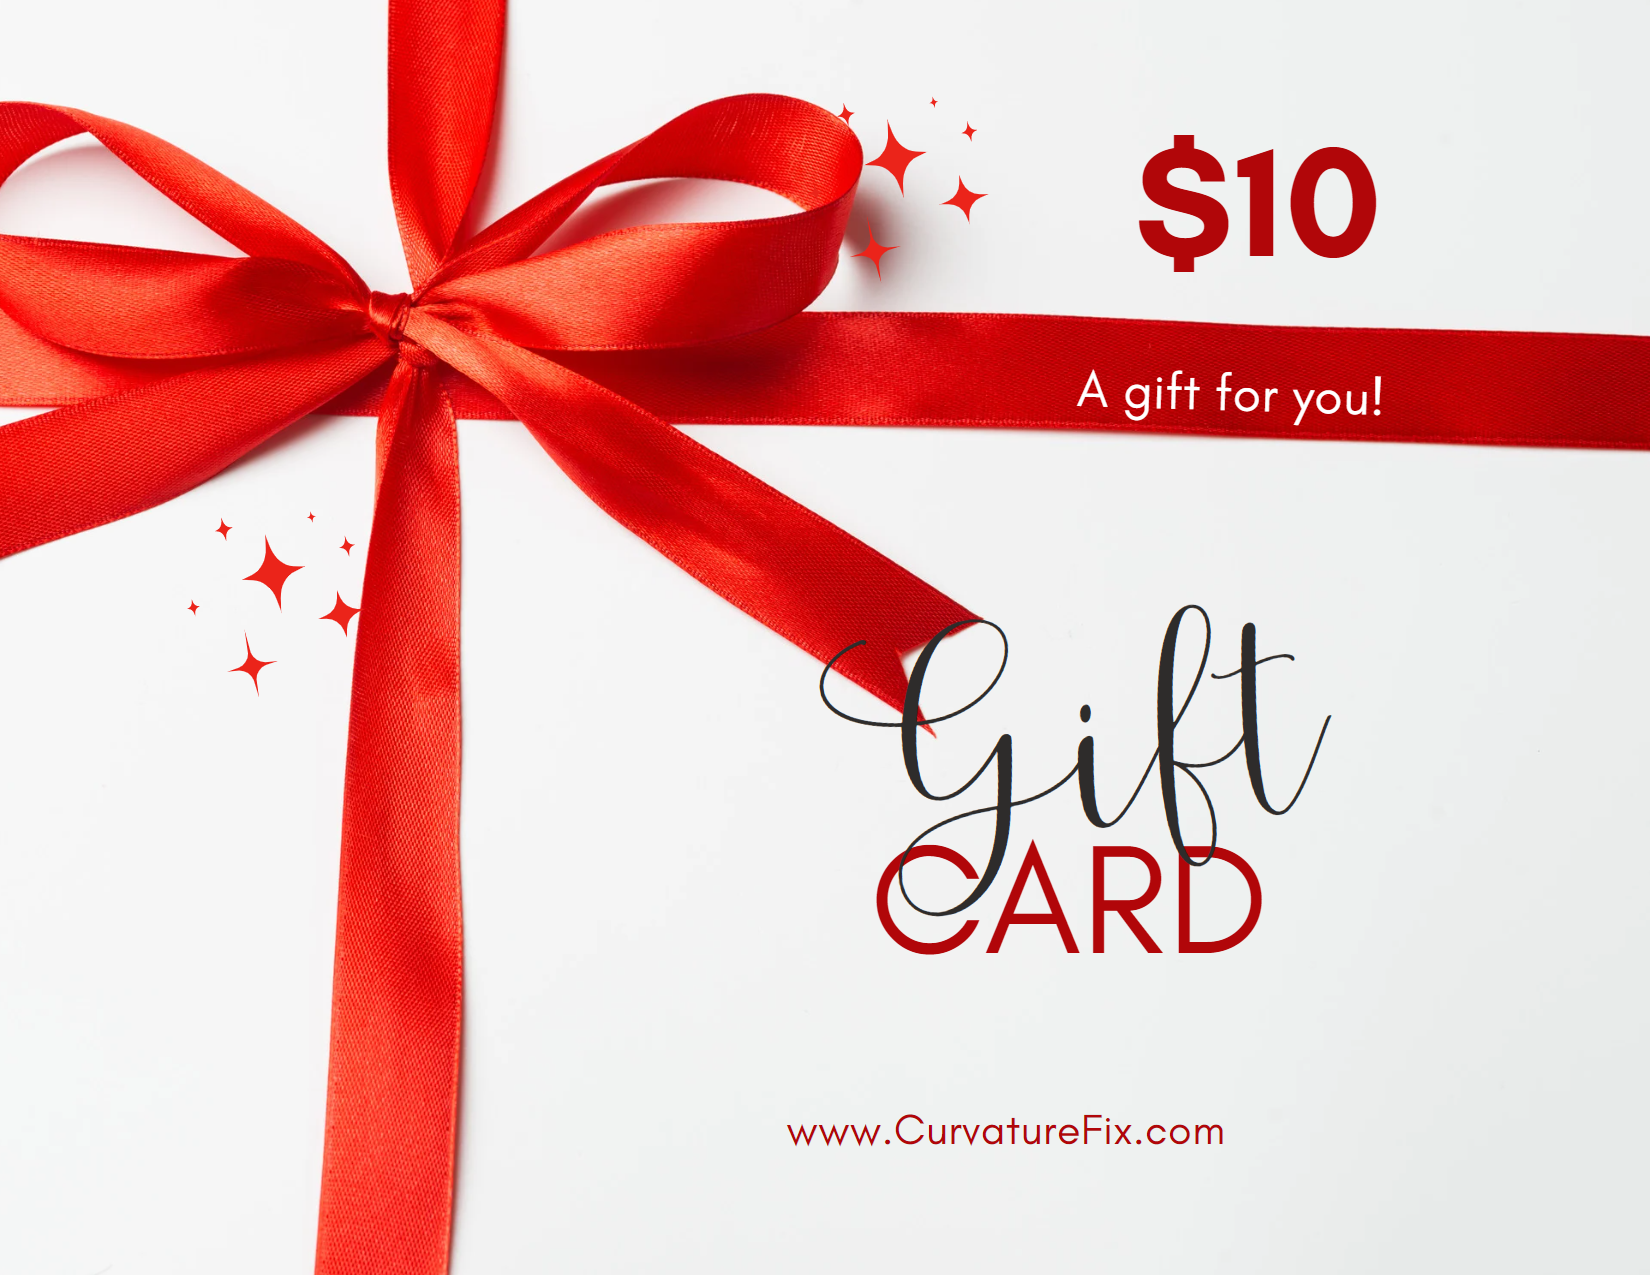 CurvatureFix Gift Card